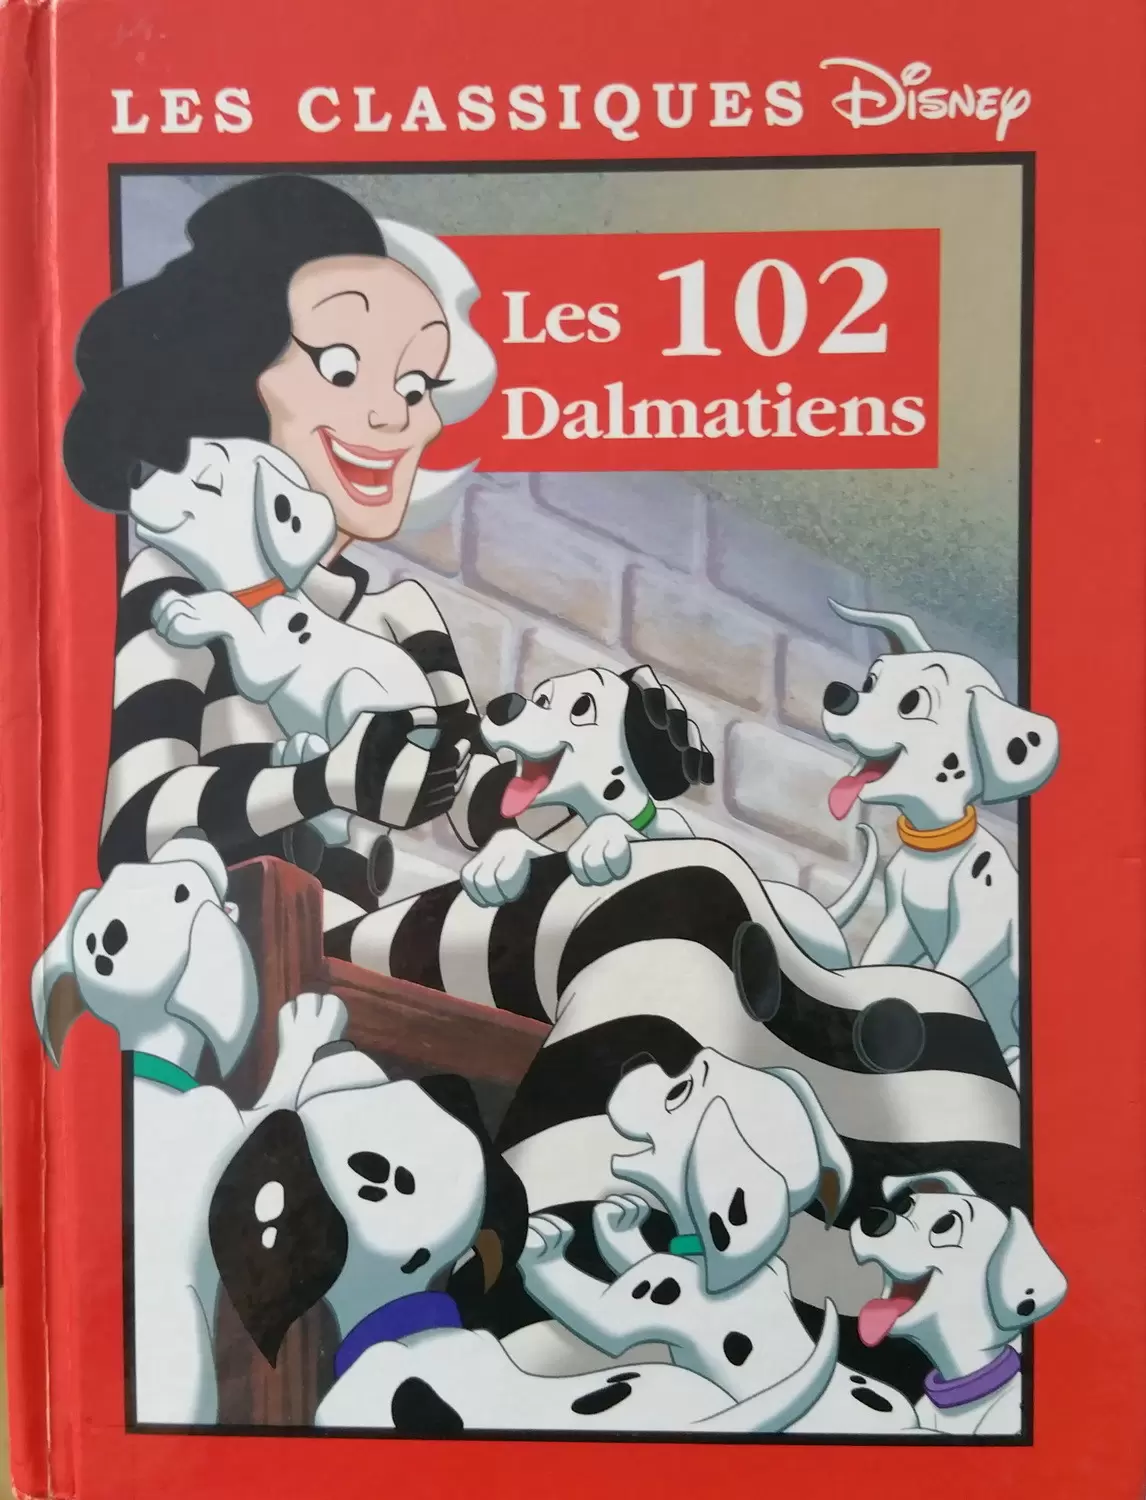 Les Classiques Disney - Edition France Loisirs - Les 102 Dalmatiens